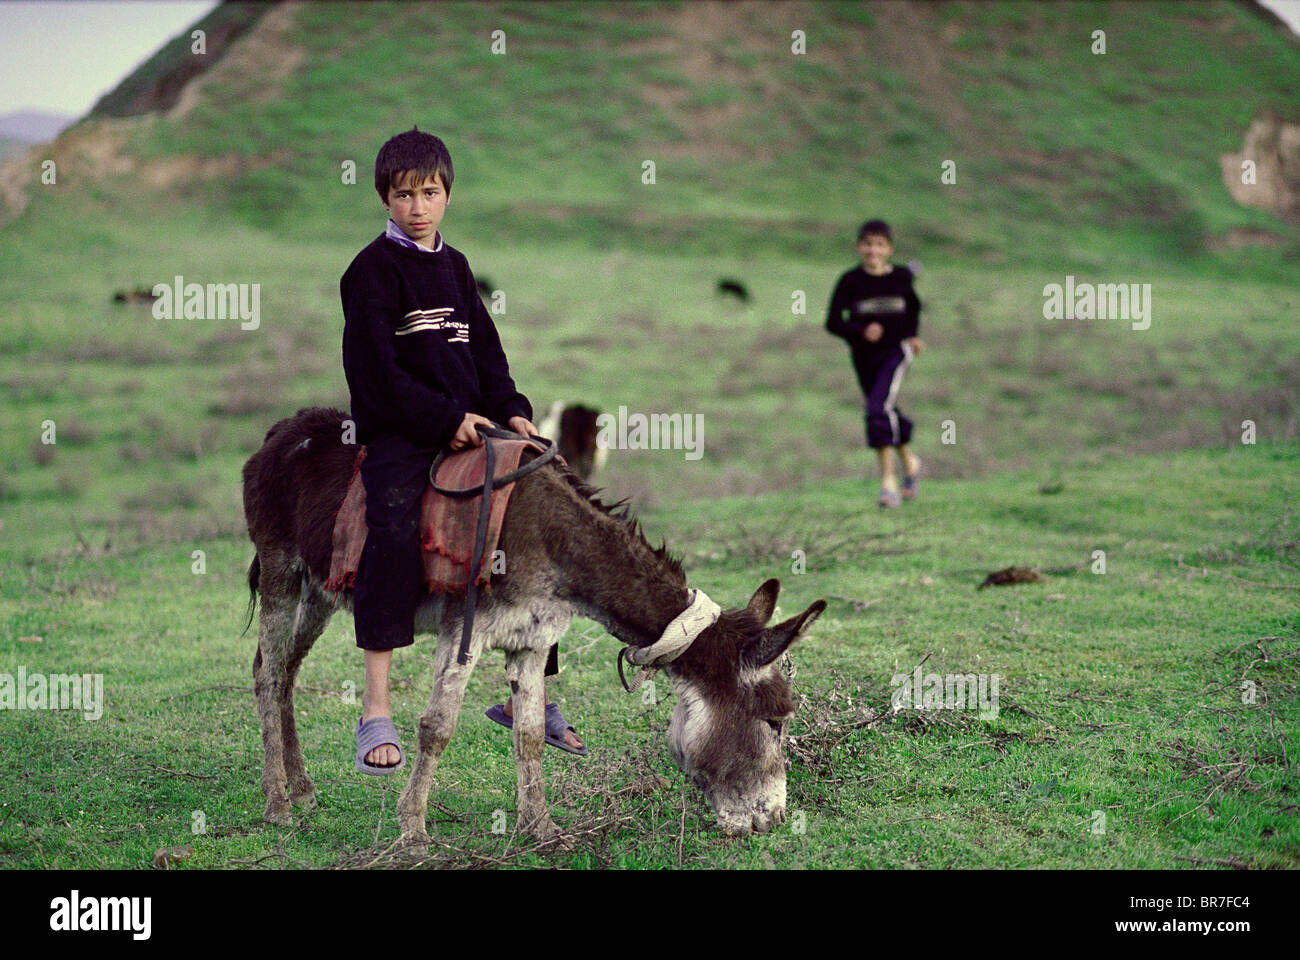 Tajik boy and his donkey Stock Photo